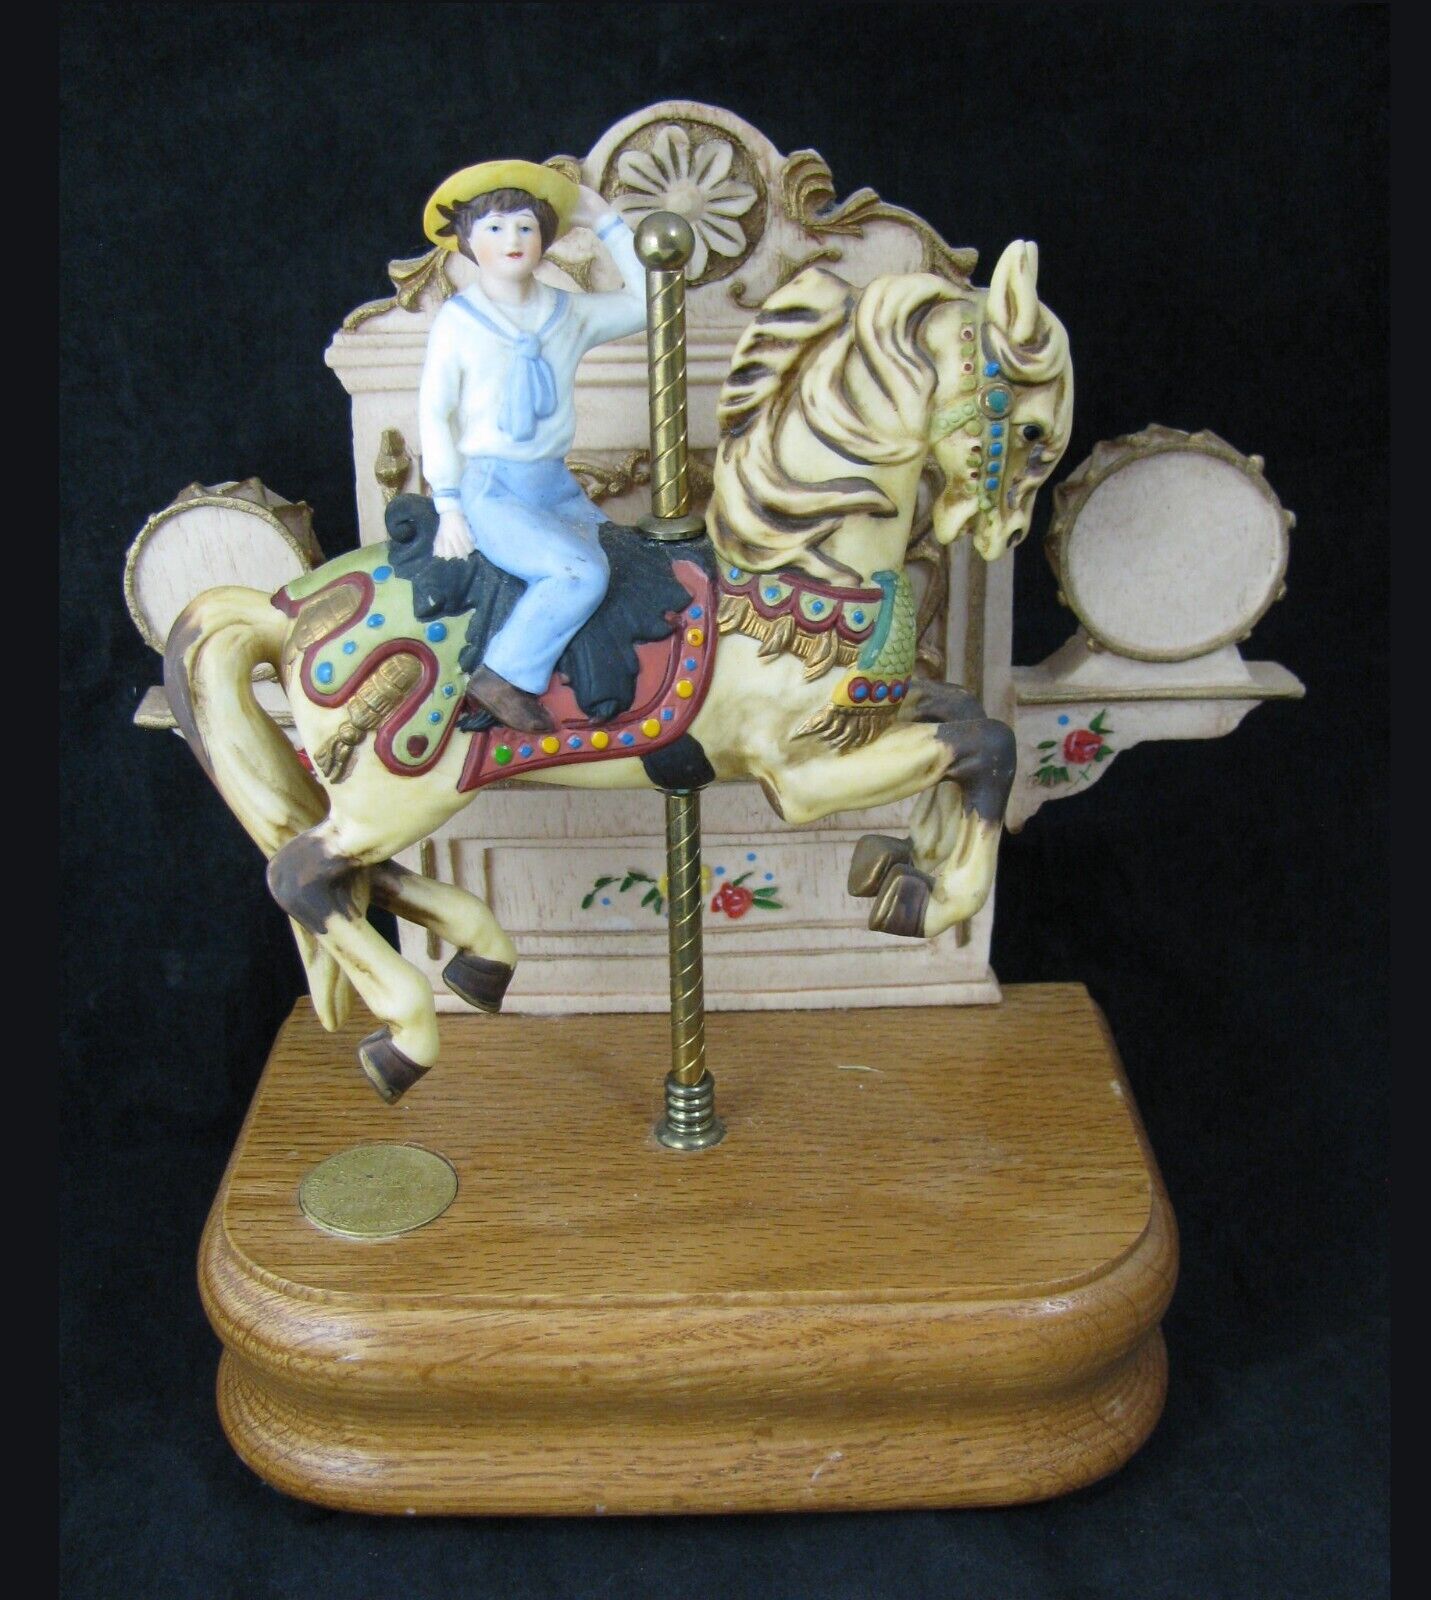 VTG American Carousel Musical Horse Rider Tobin Fraley 3rd edition music box